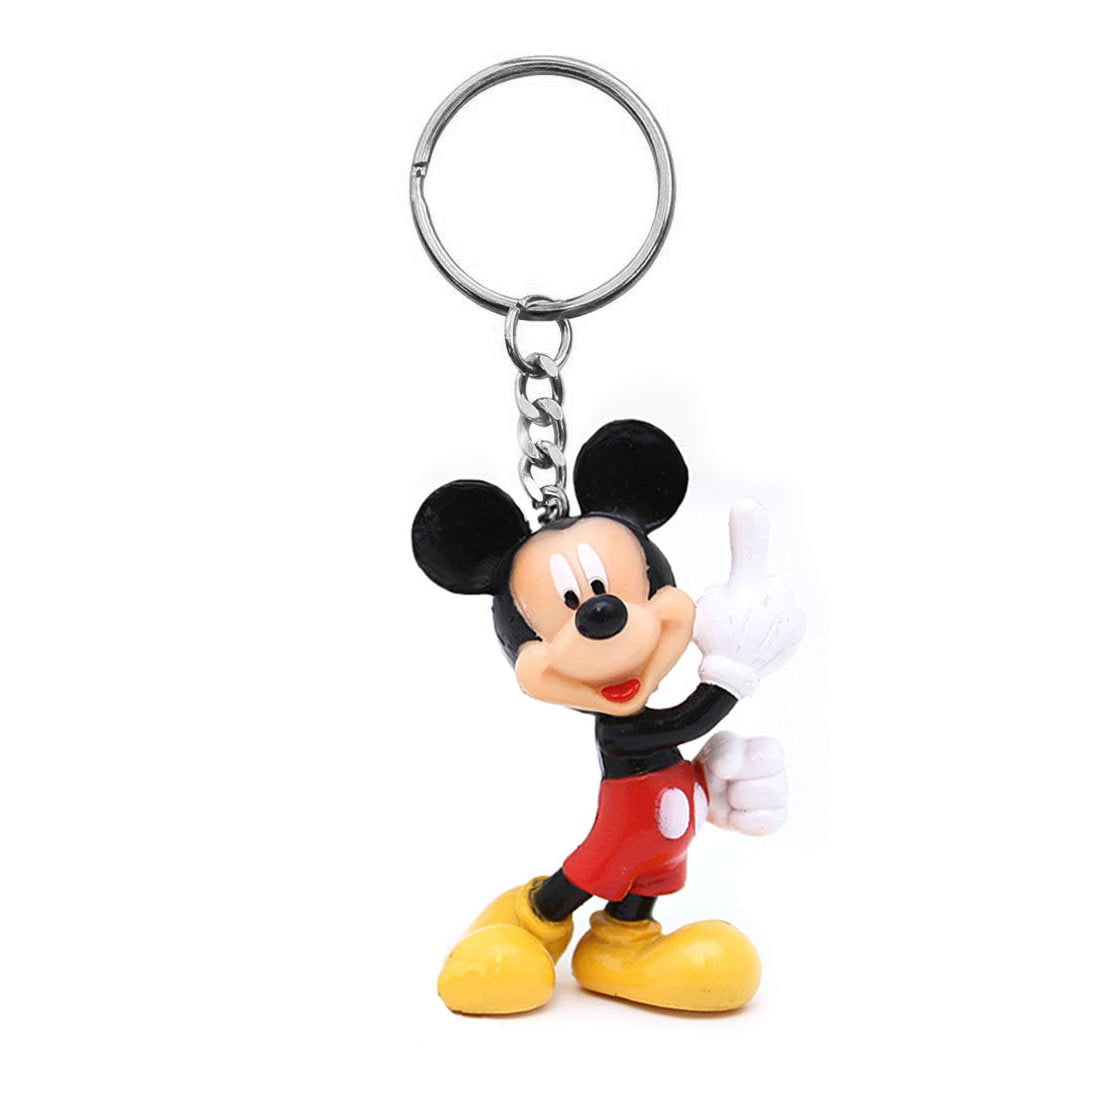 Disney Mickey Mouse keychain full body